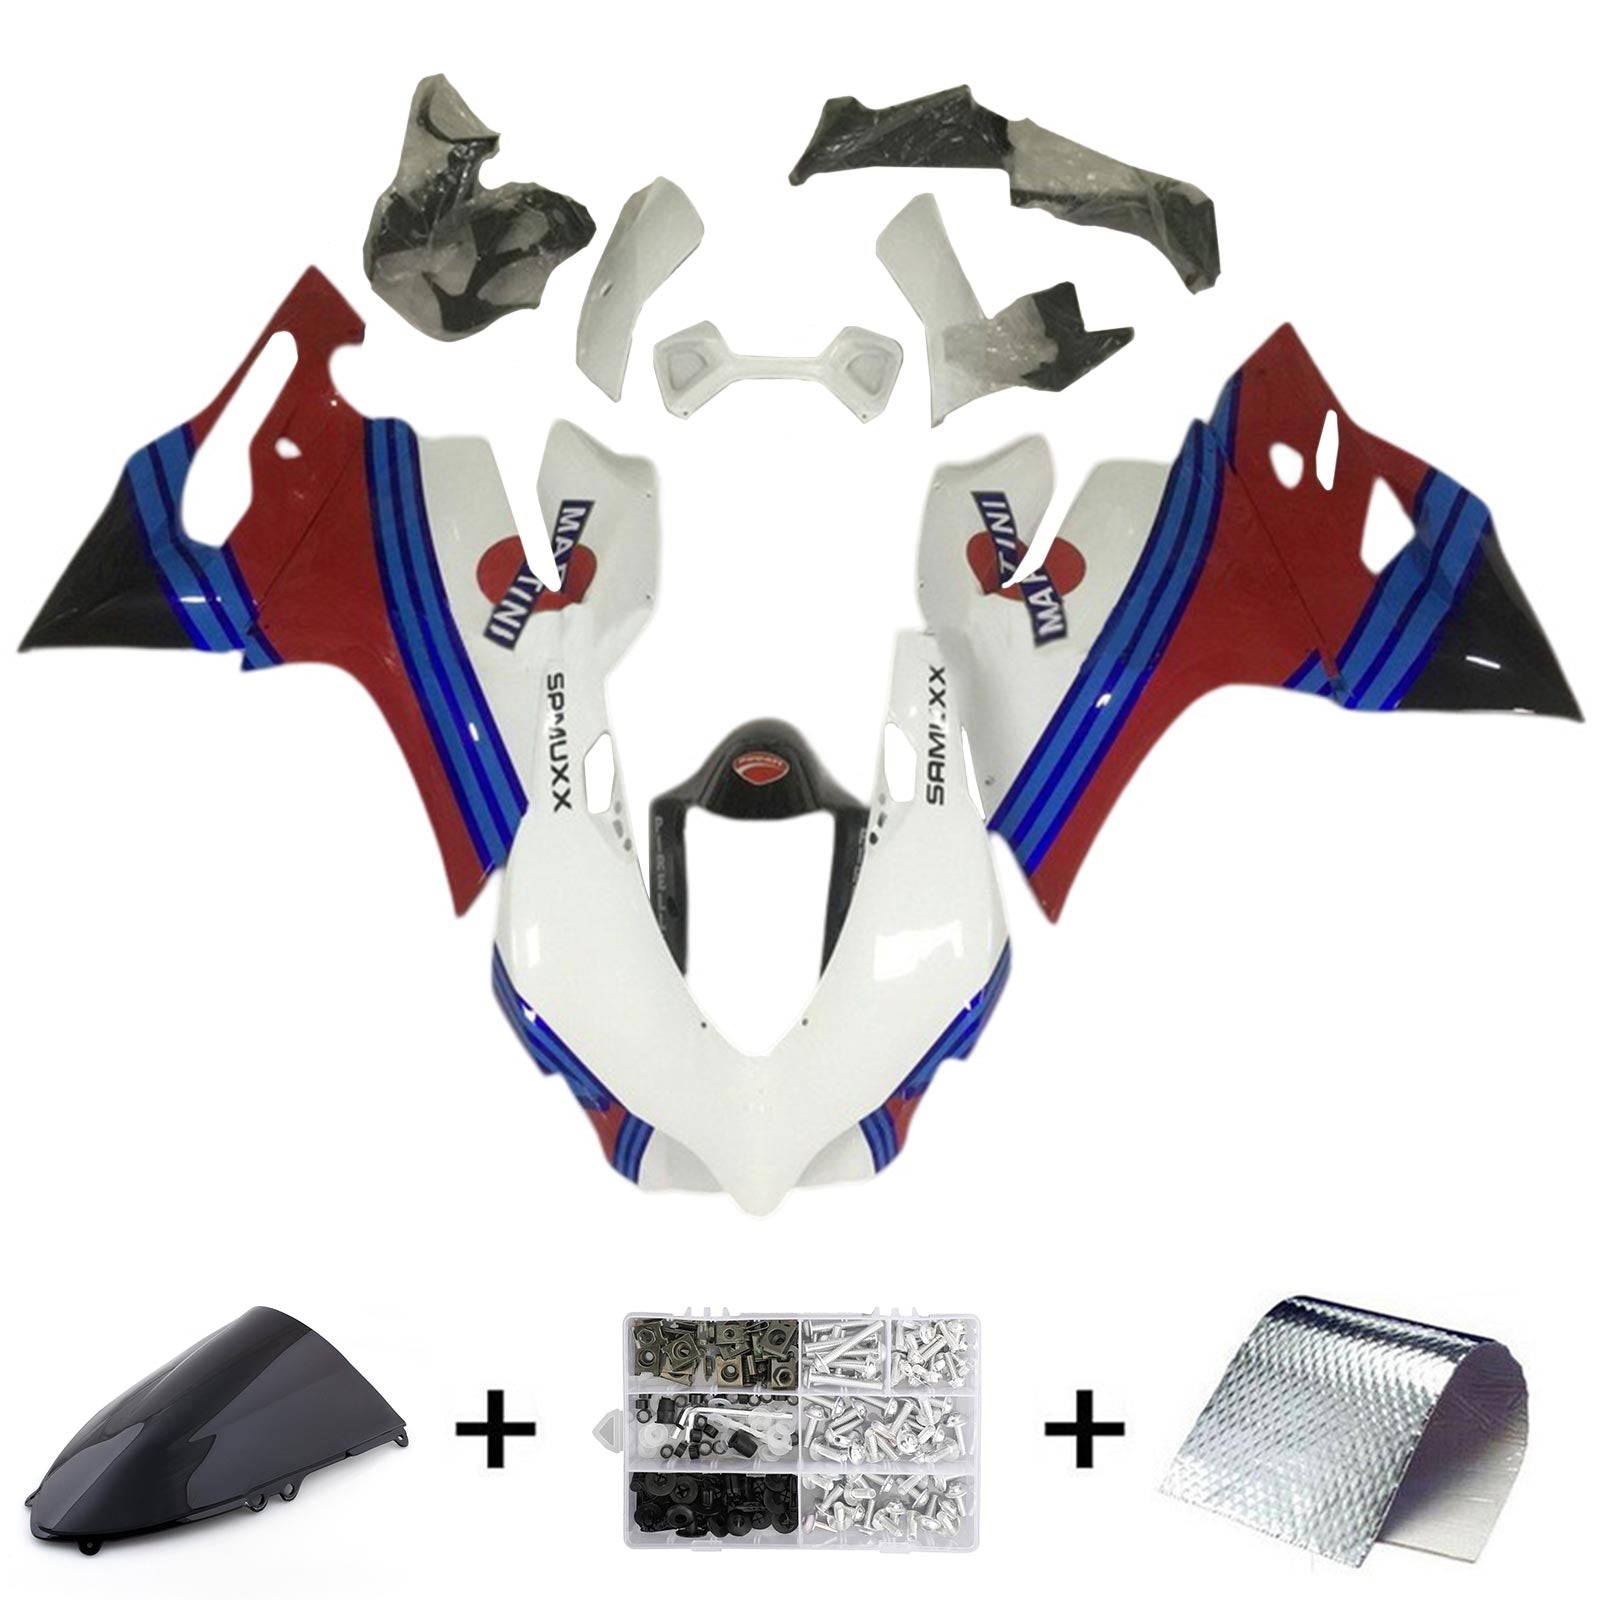 Amotopart Ducati 1199 899 2012-2015 Kit Carénage Carrosserie Plastique ABS